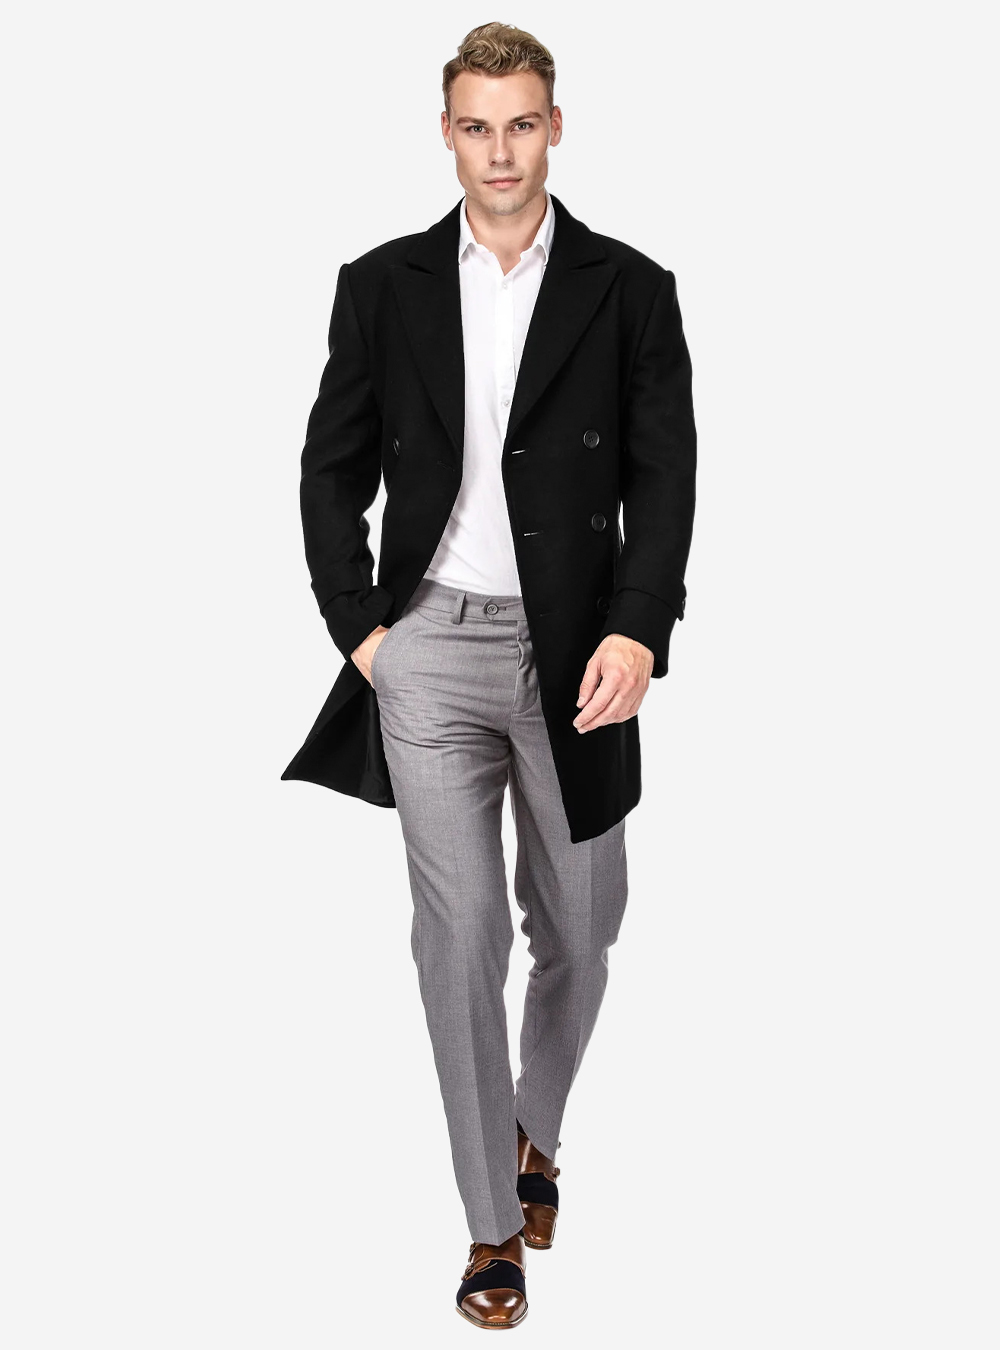 black peacoat, white shirt, and grey pants